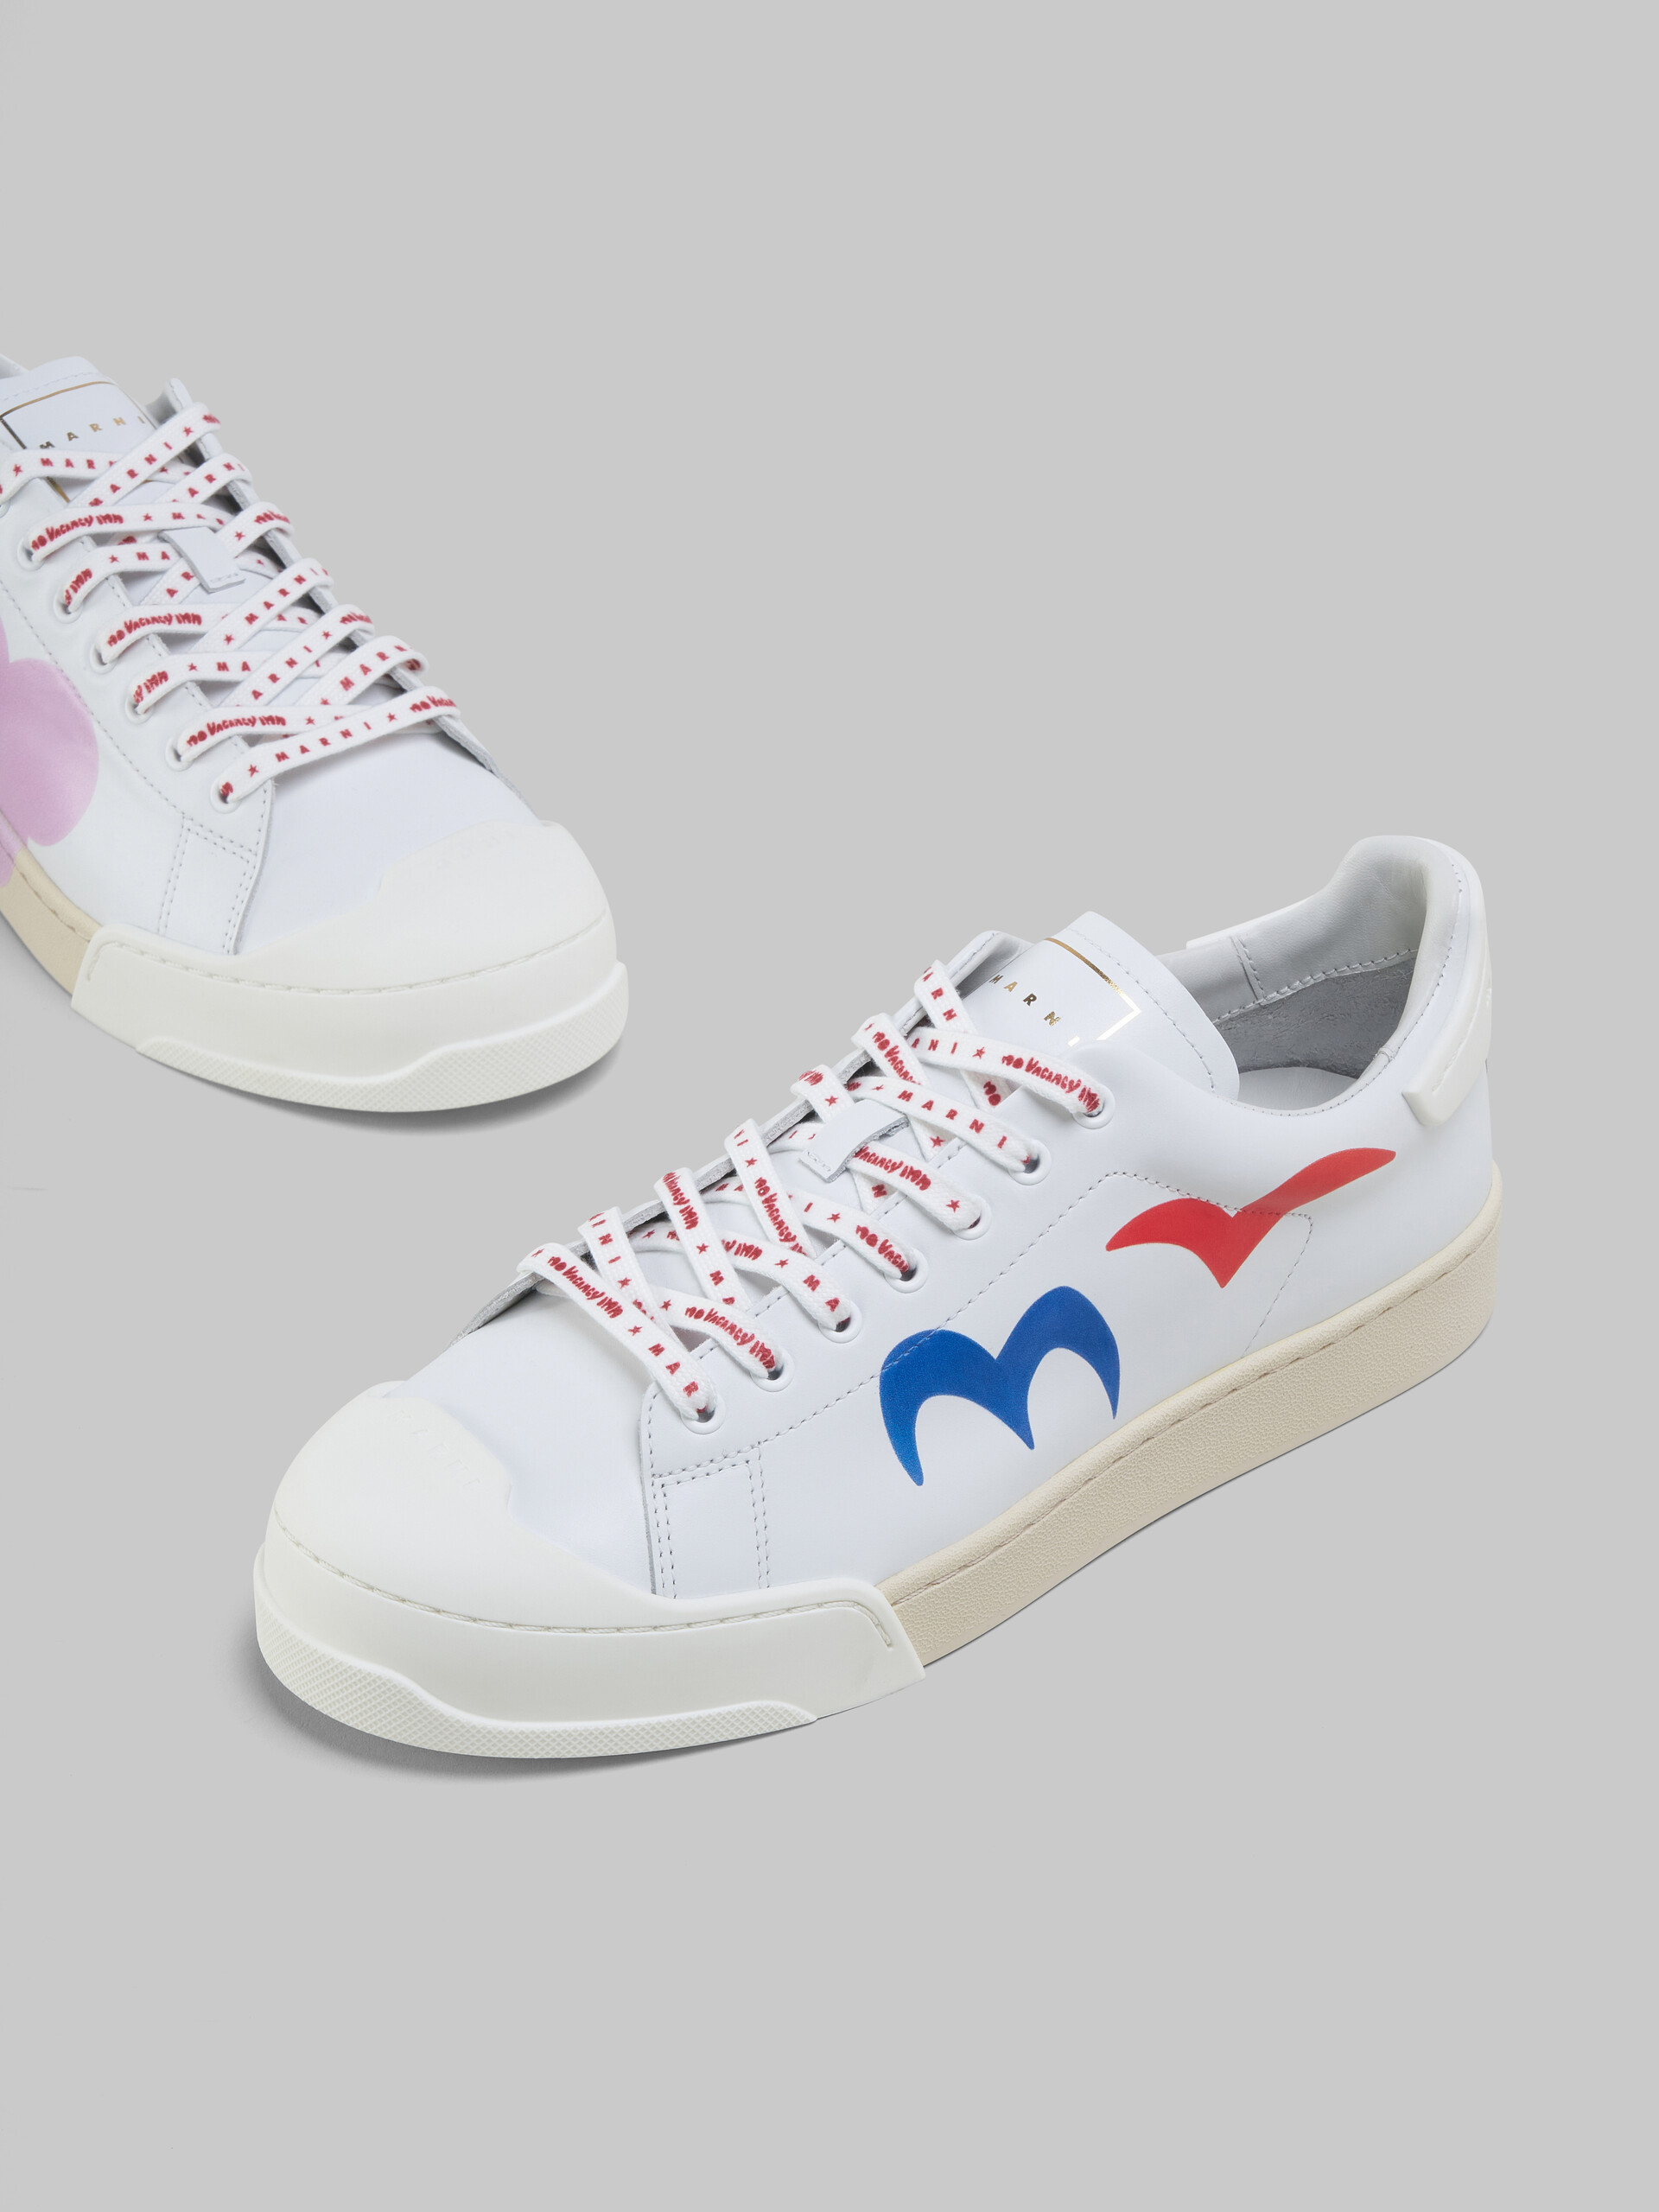 Marni x No Vacancy Inn - Dada Bumper sneaker in white printed leather - Sneakers - Image 5